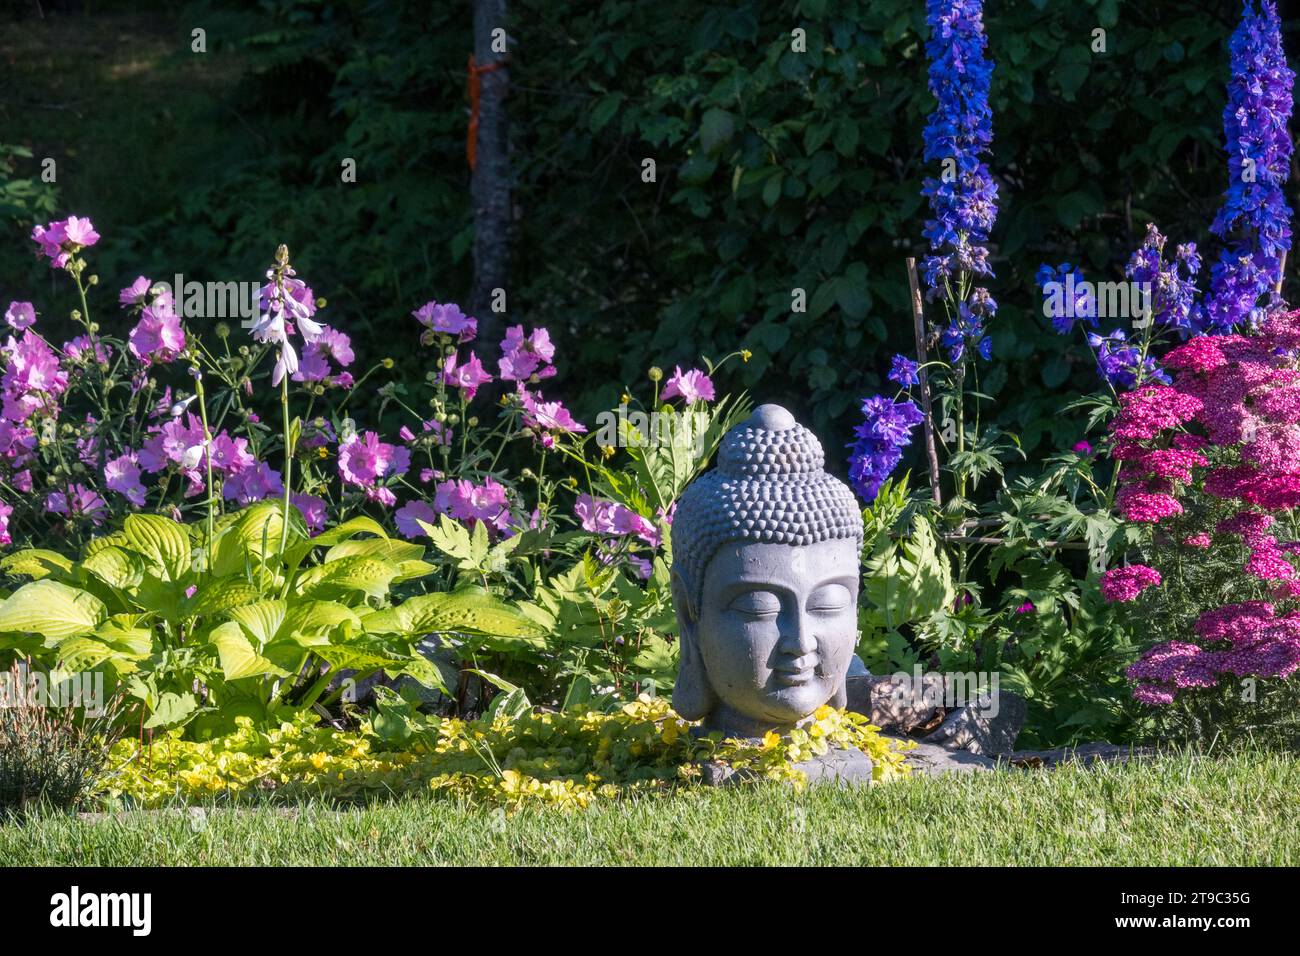 Alamy Buddha stock gardening - photography images and hi-res